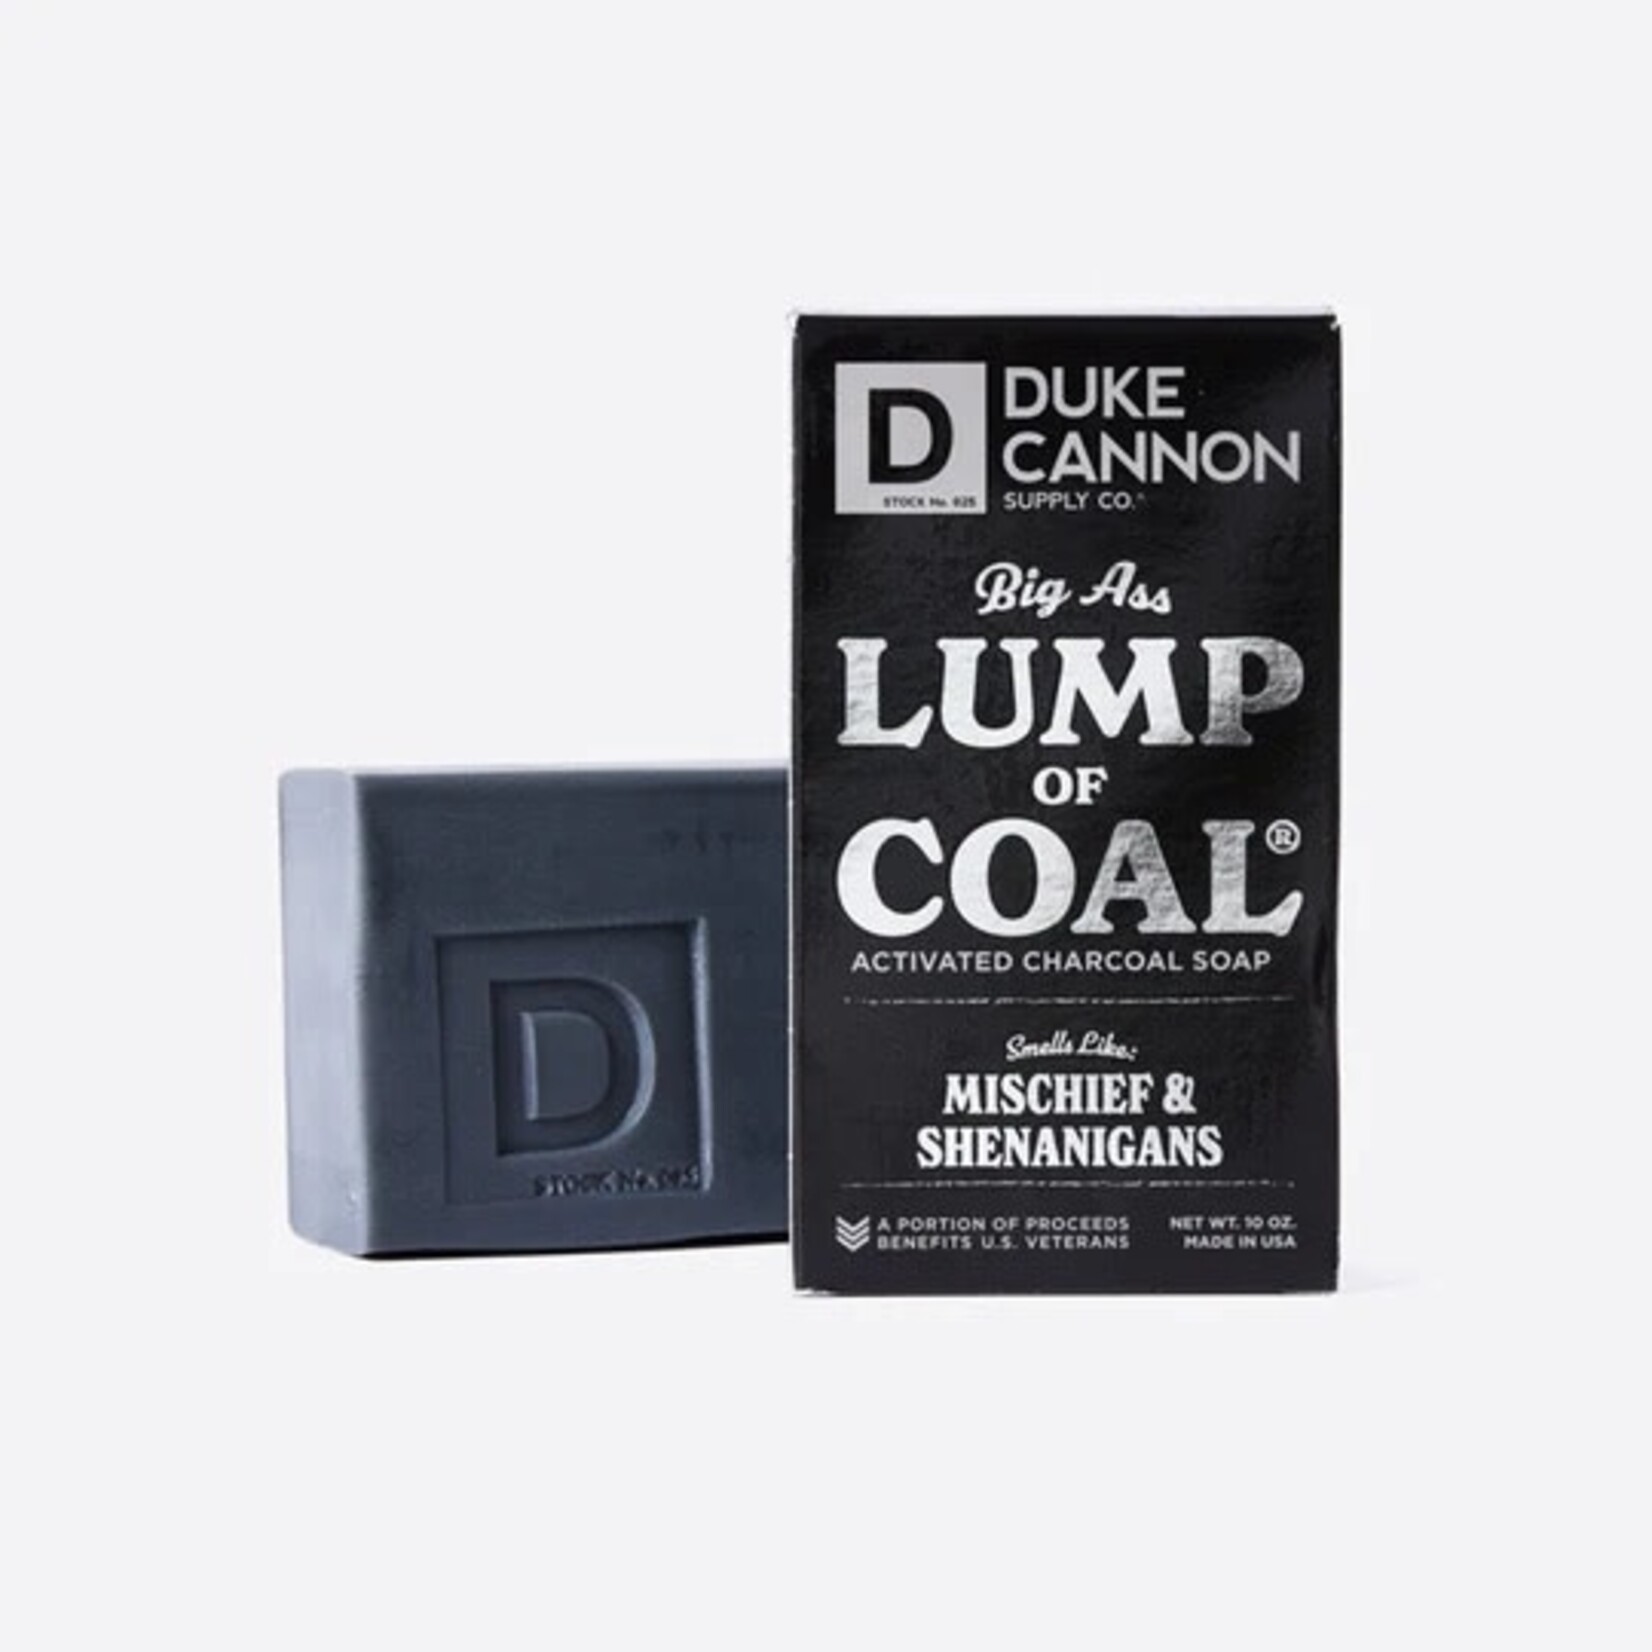 Duke Cannon Big Ass Brick of Soap- Lump of Coal